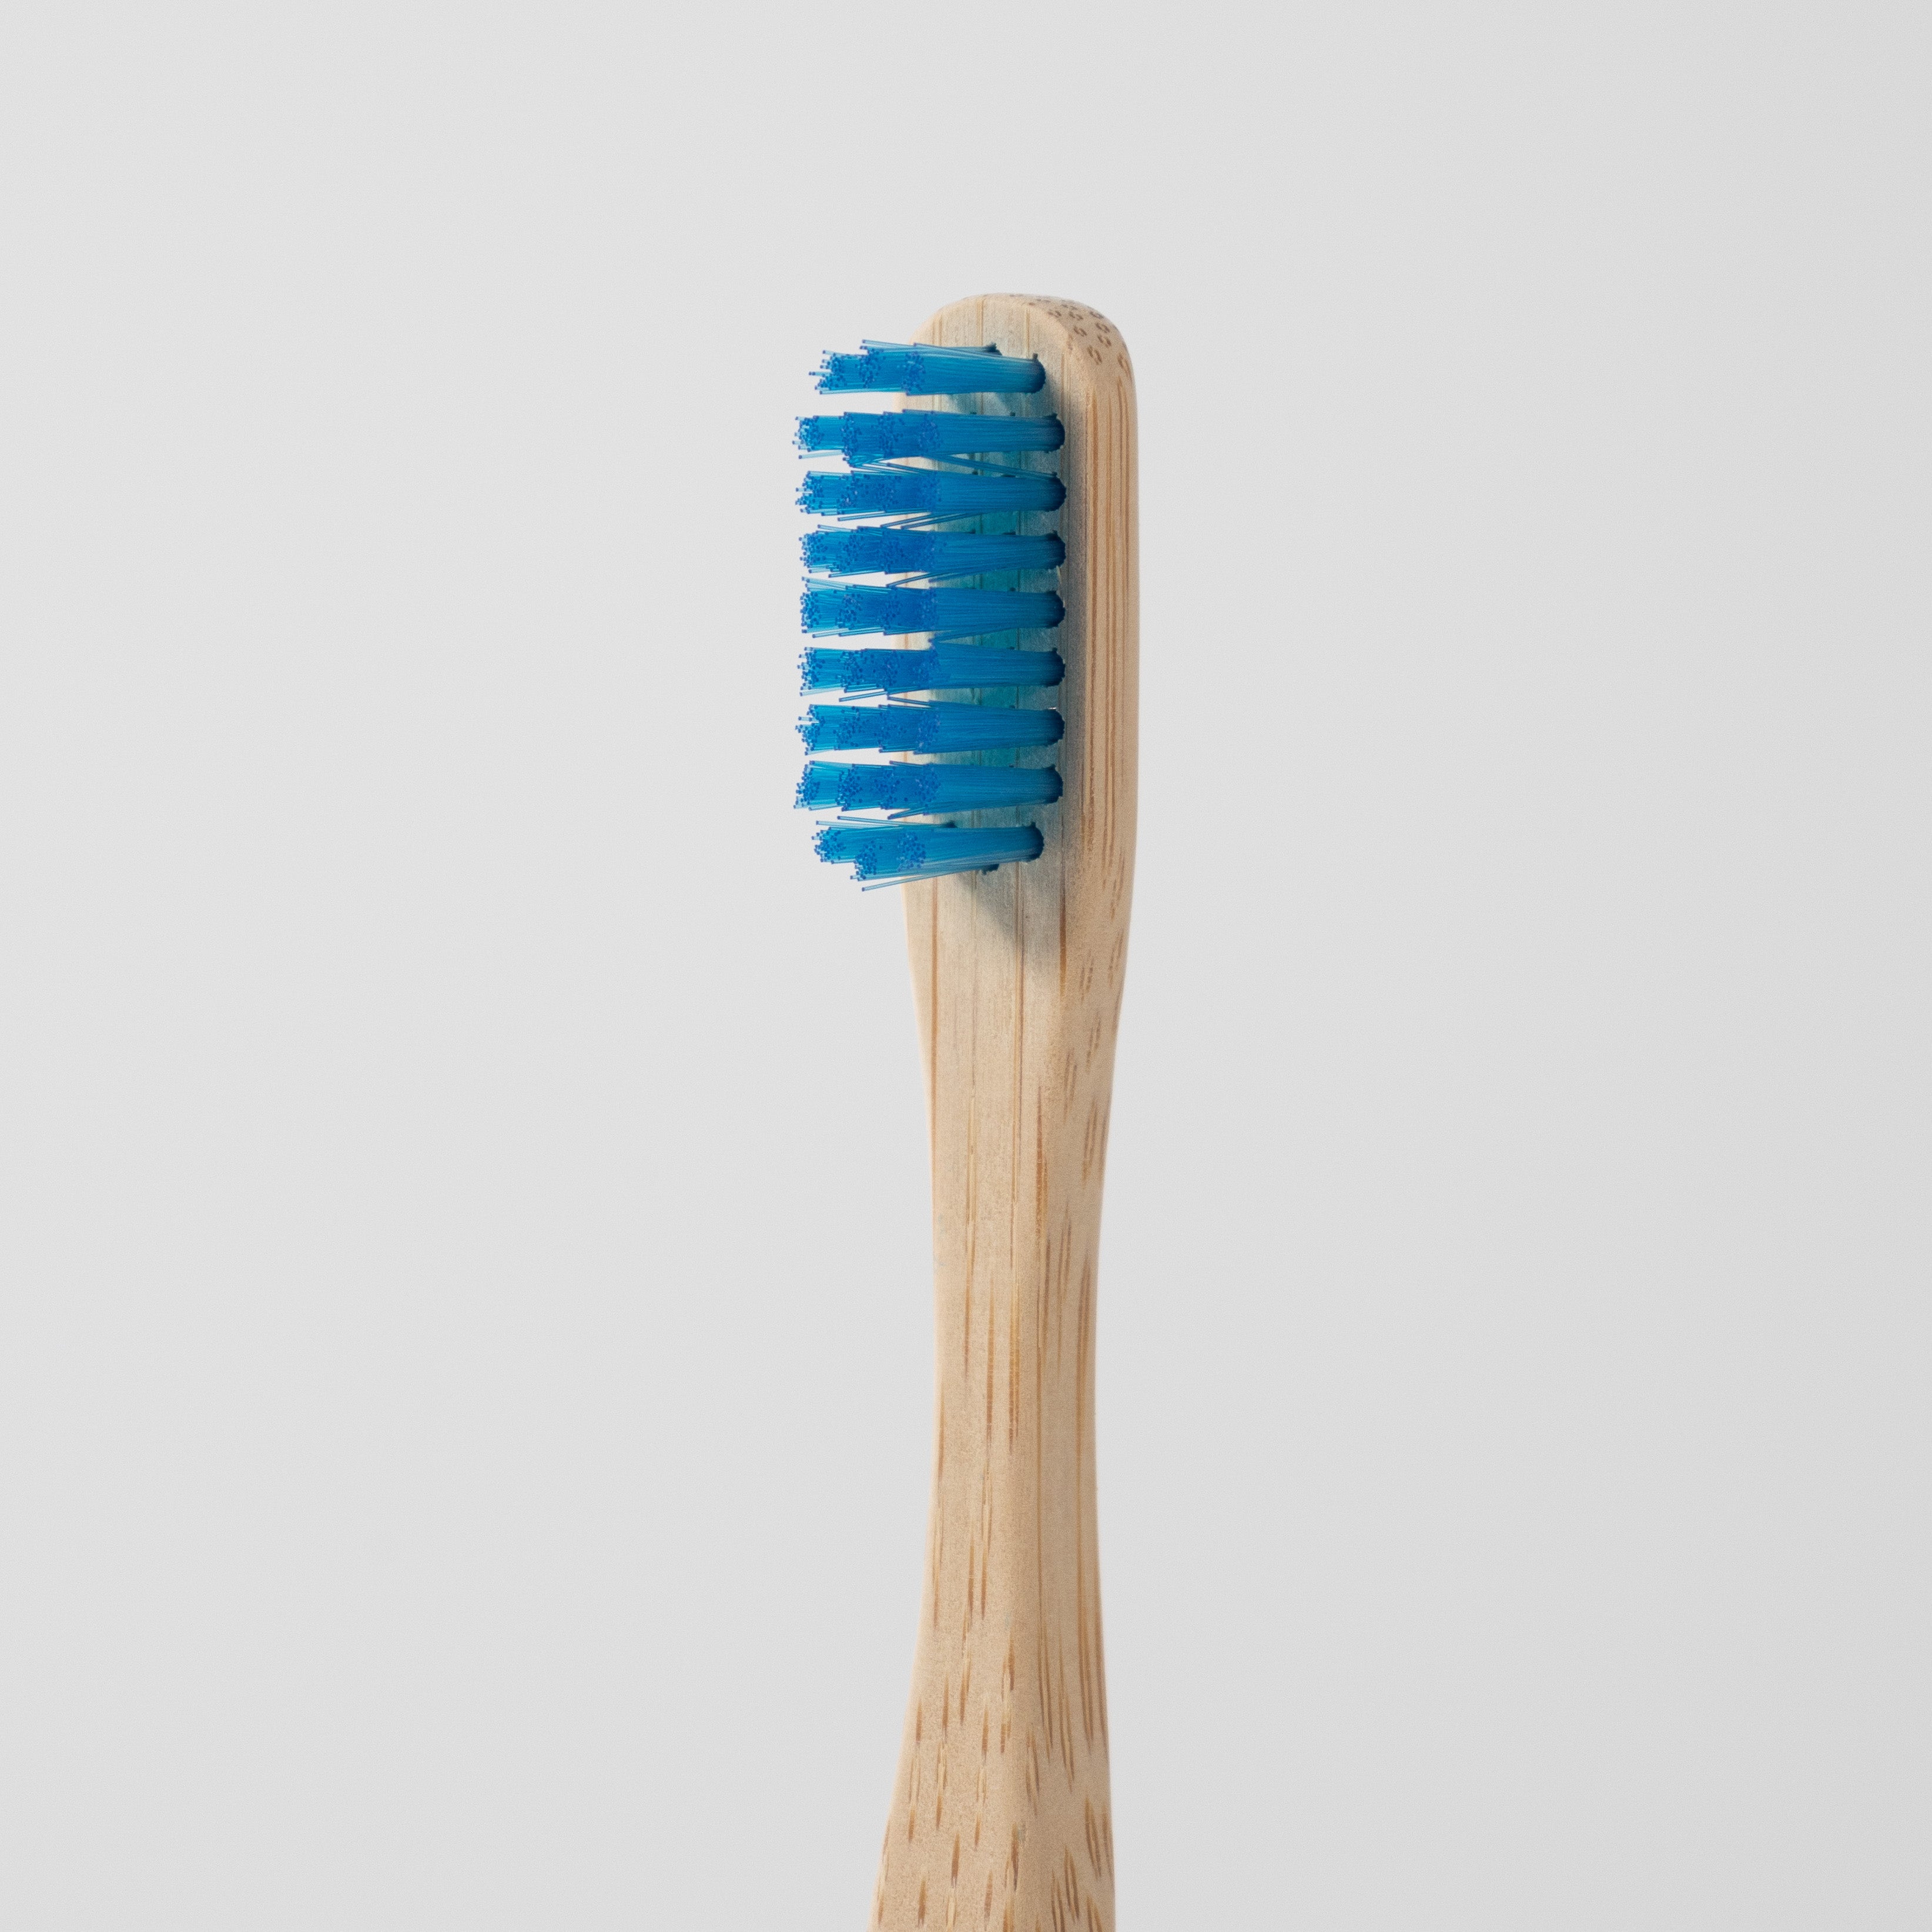 Blue bristles of bamboo toothbrush